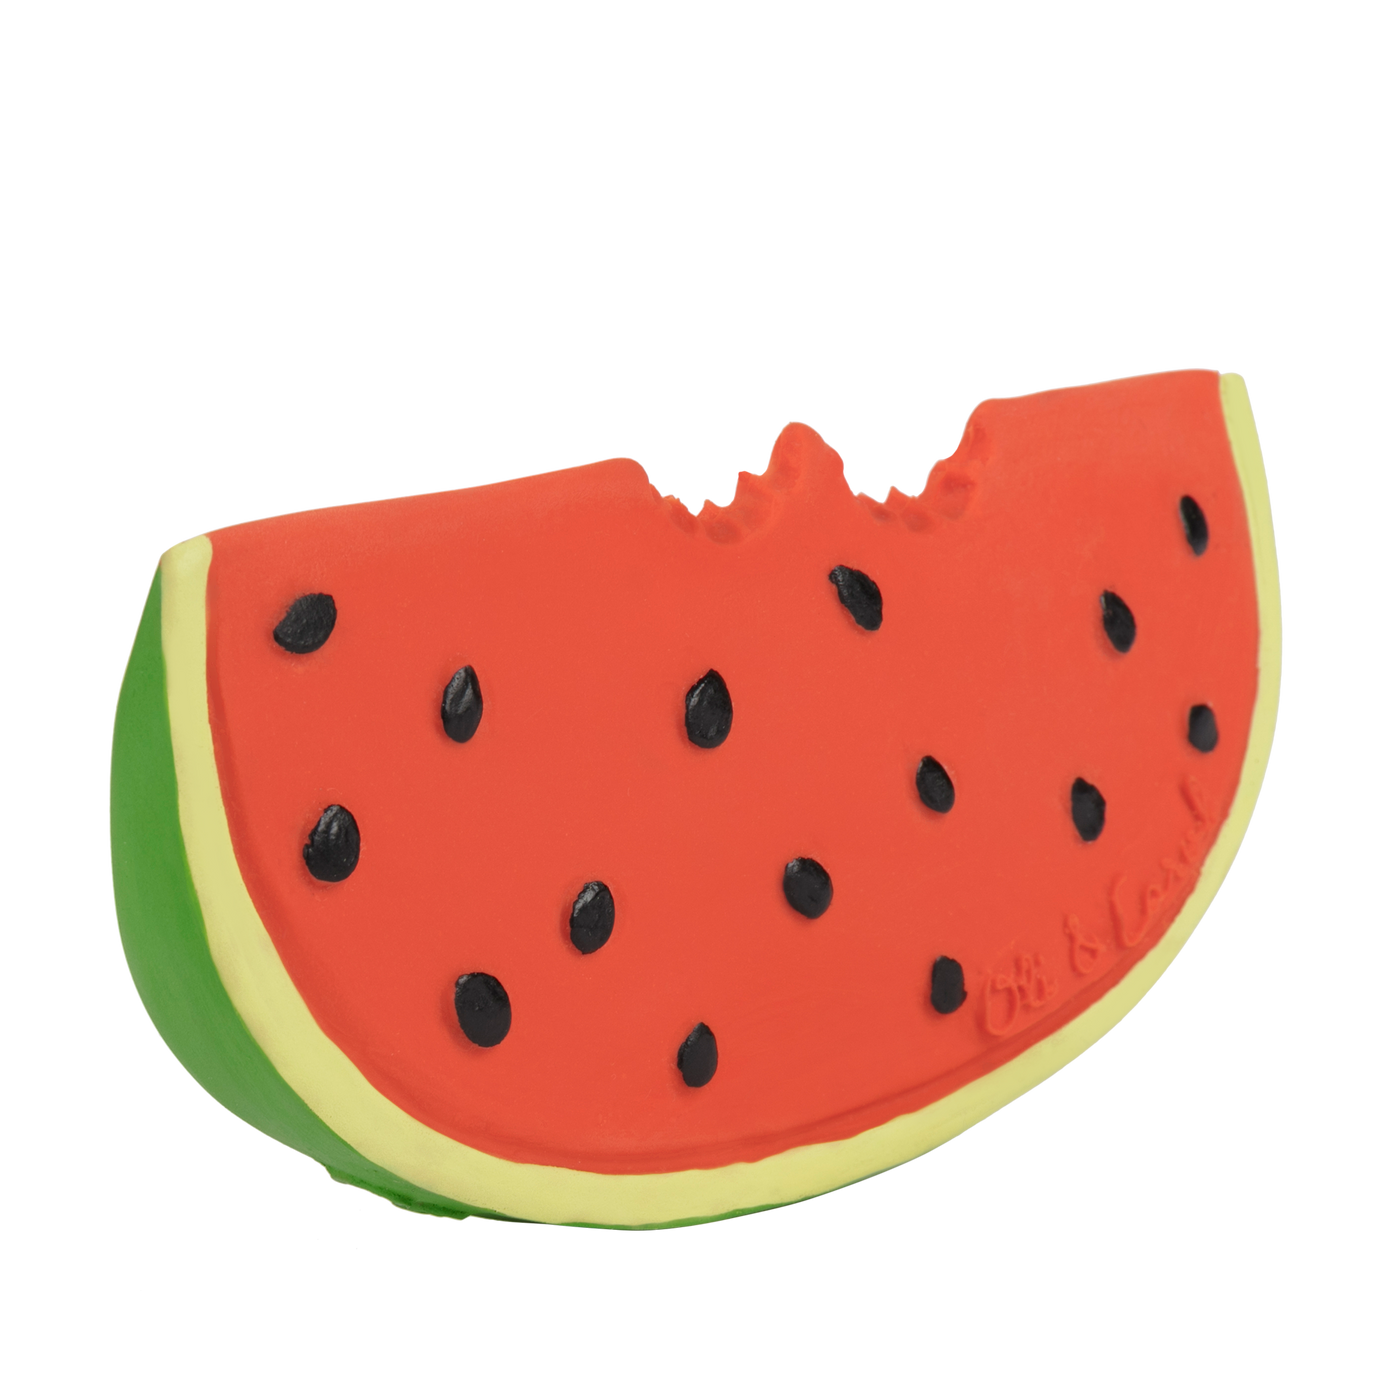 Mordedor Sandía: Wally, the watermelon